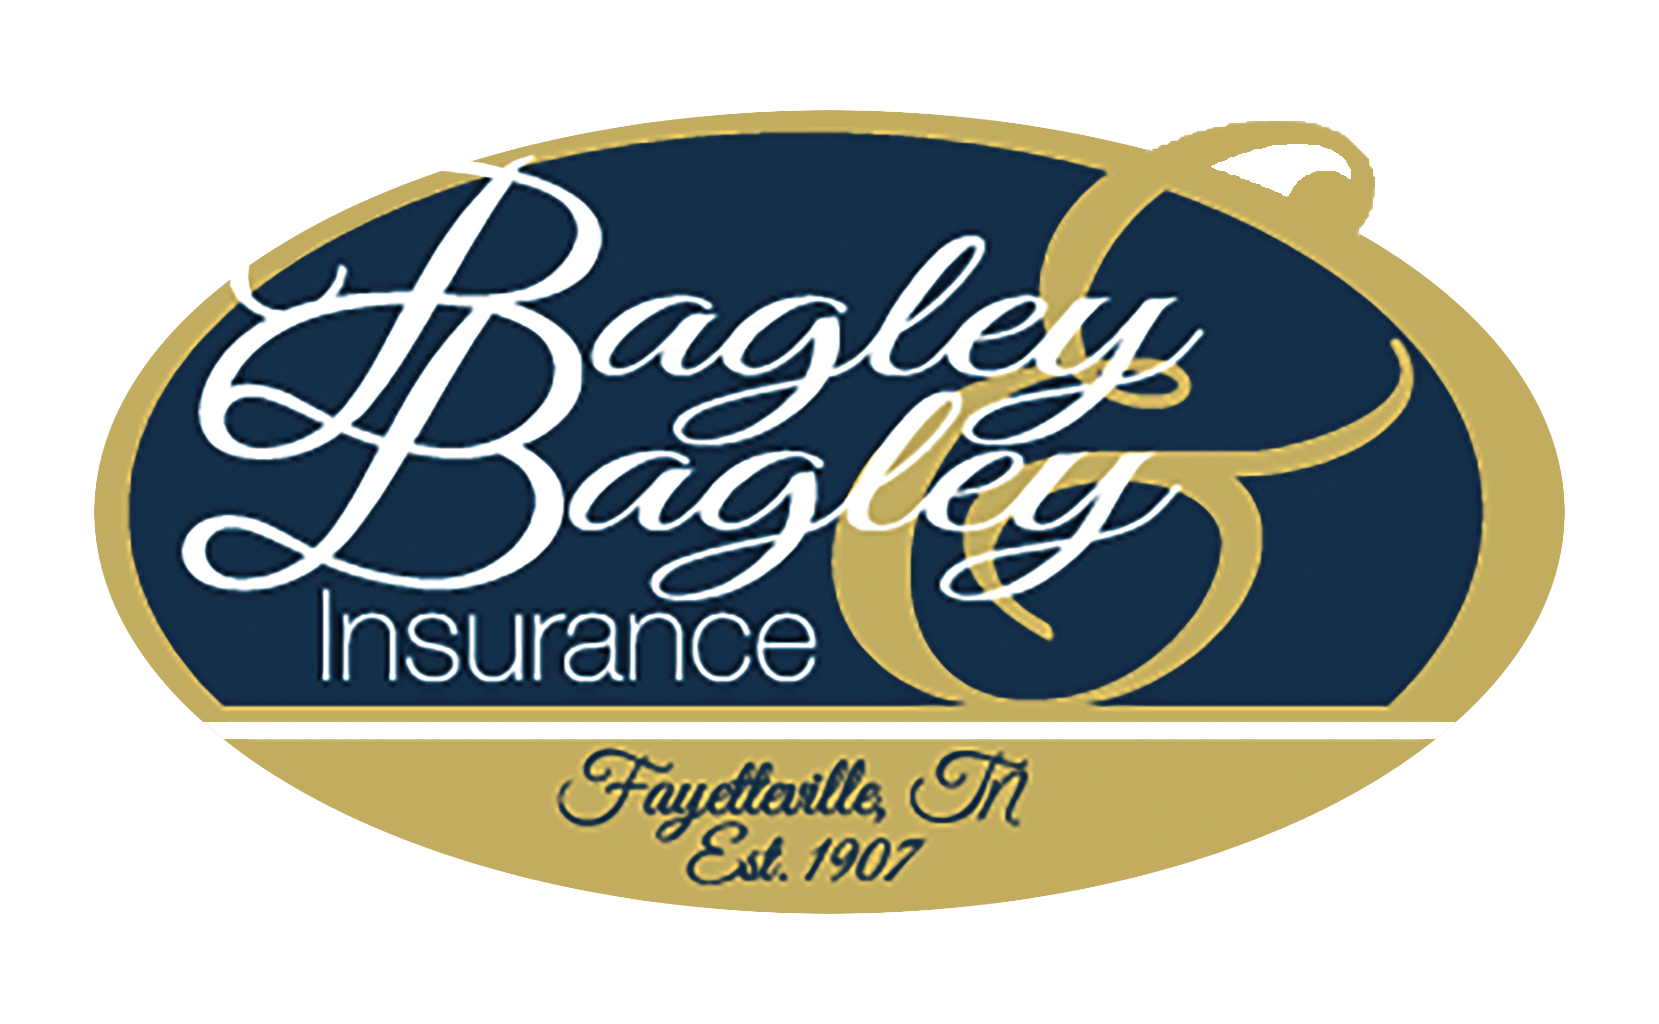 Bagley & Bagley Insurance